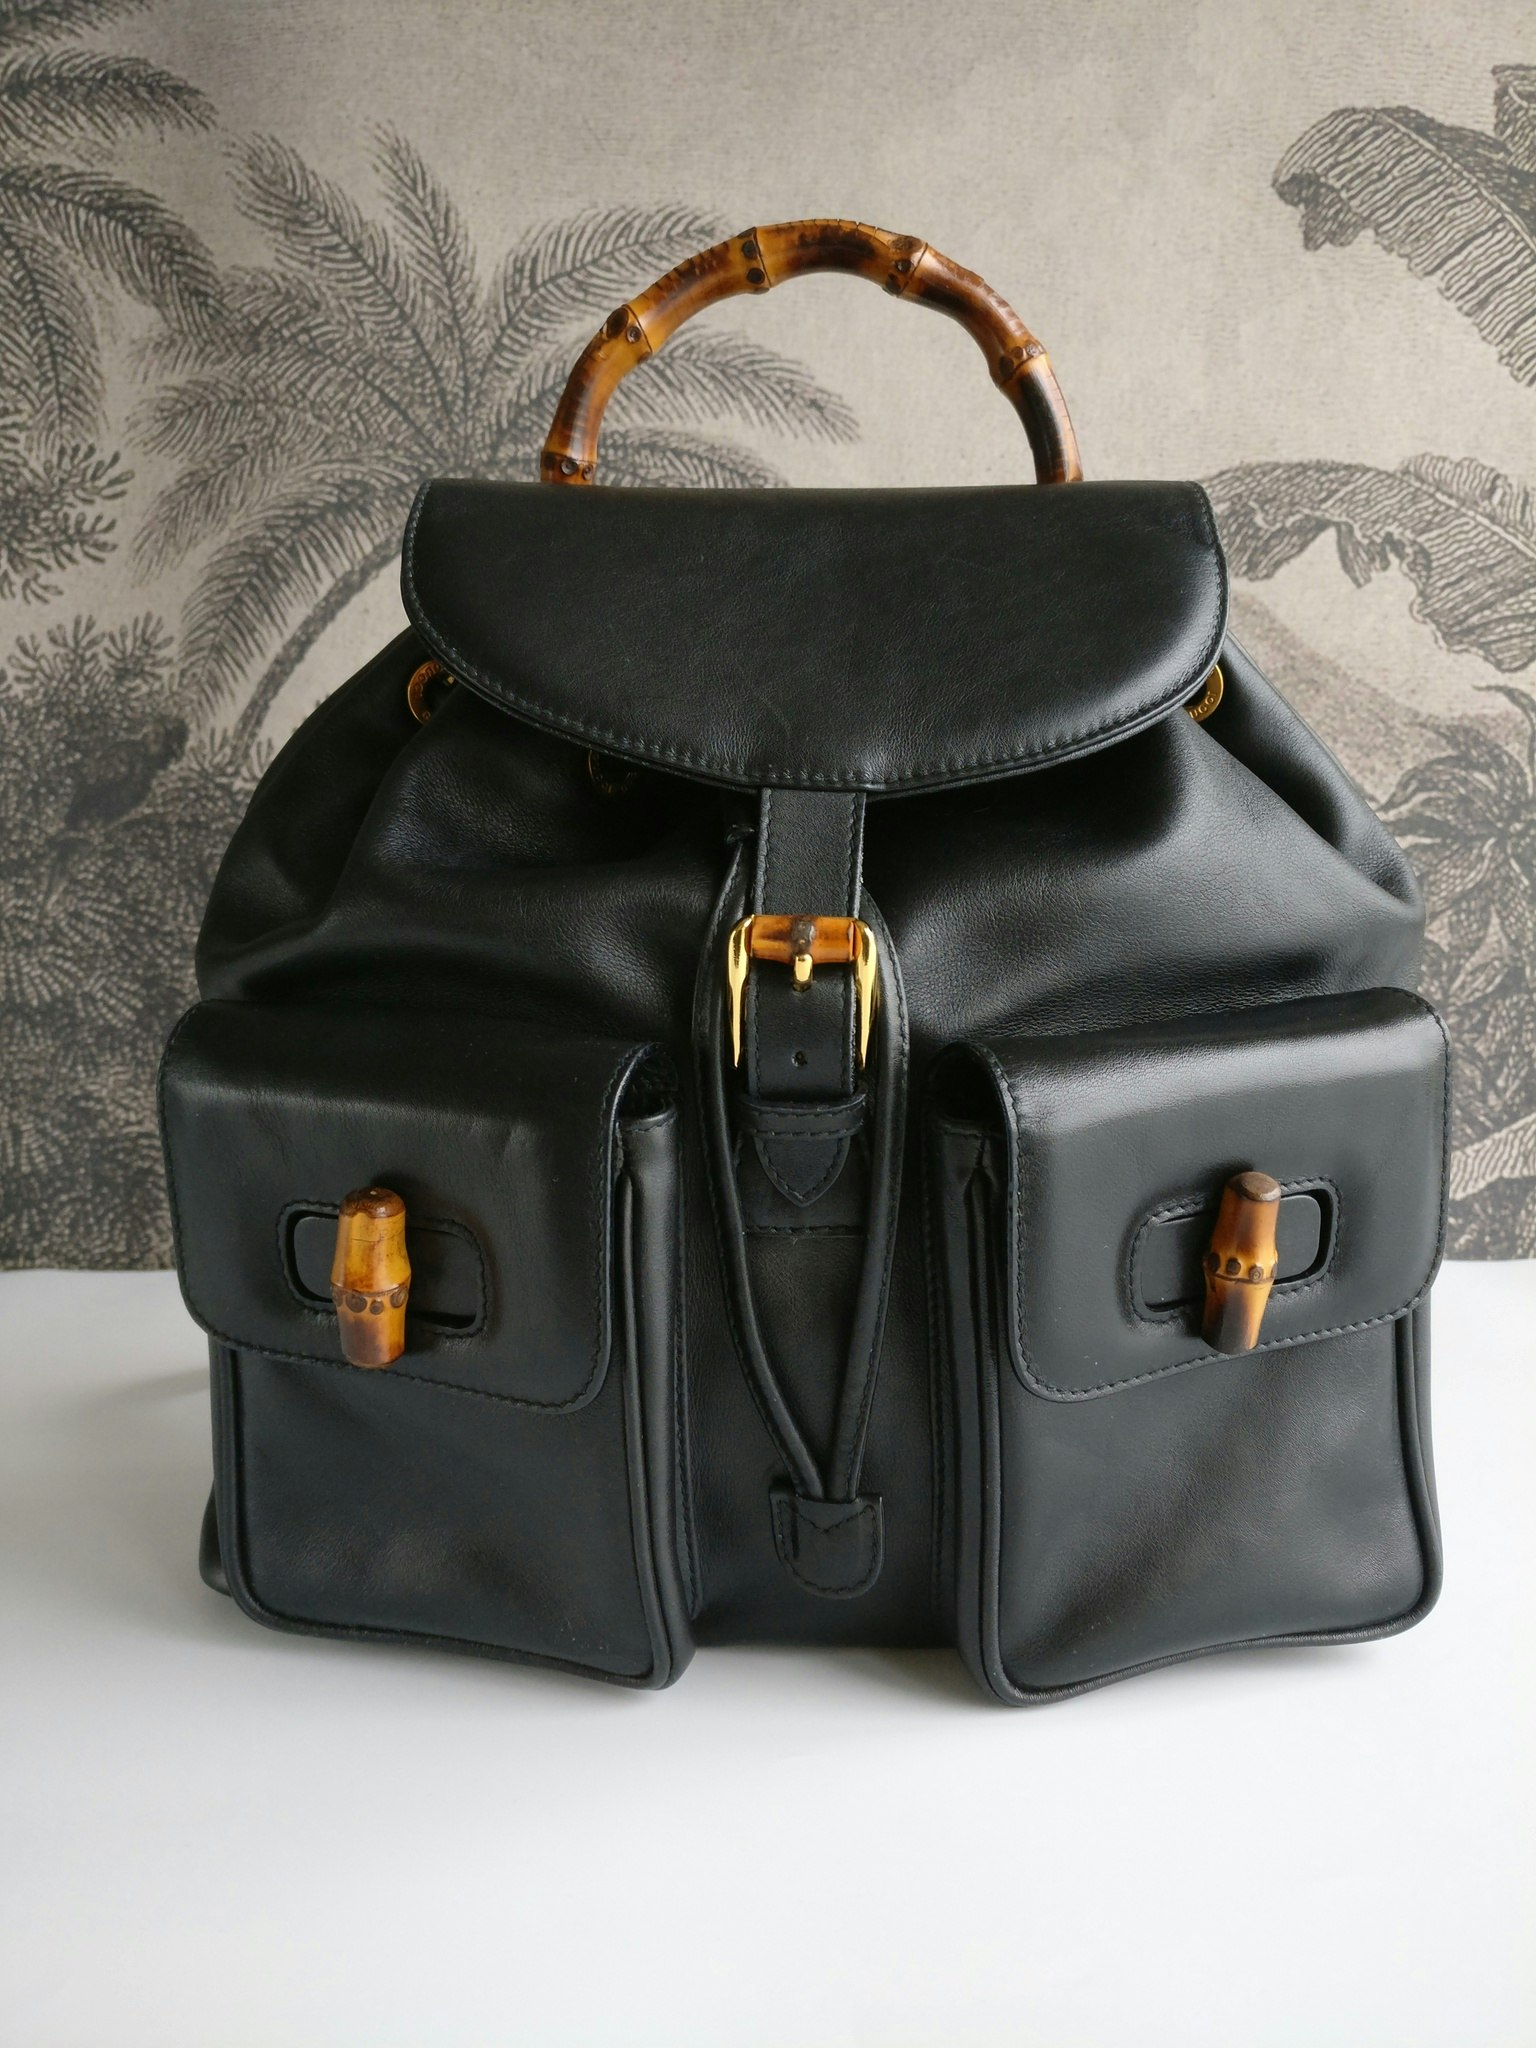 Gucci Bamboo backpack - Good or Bag